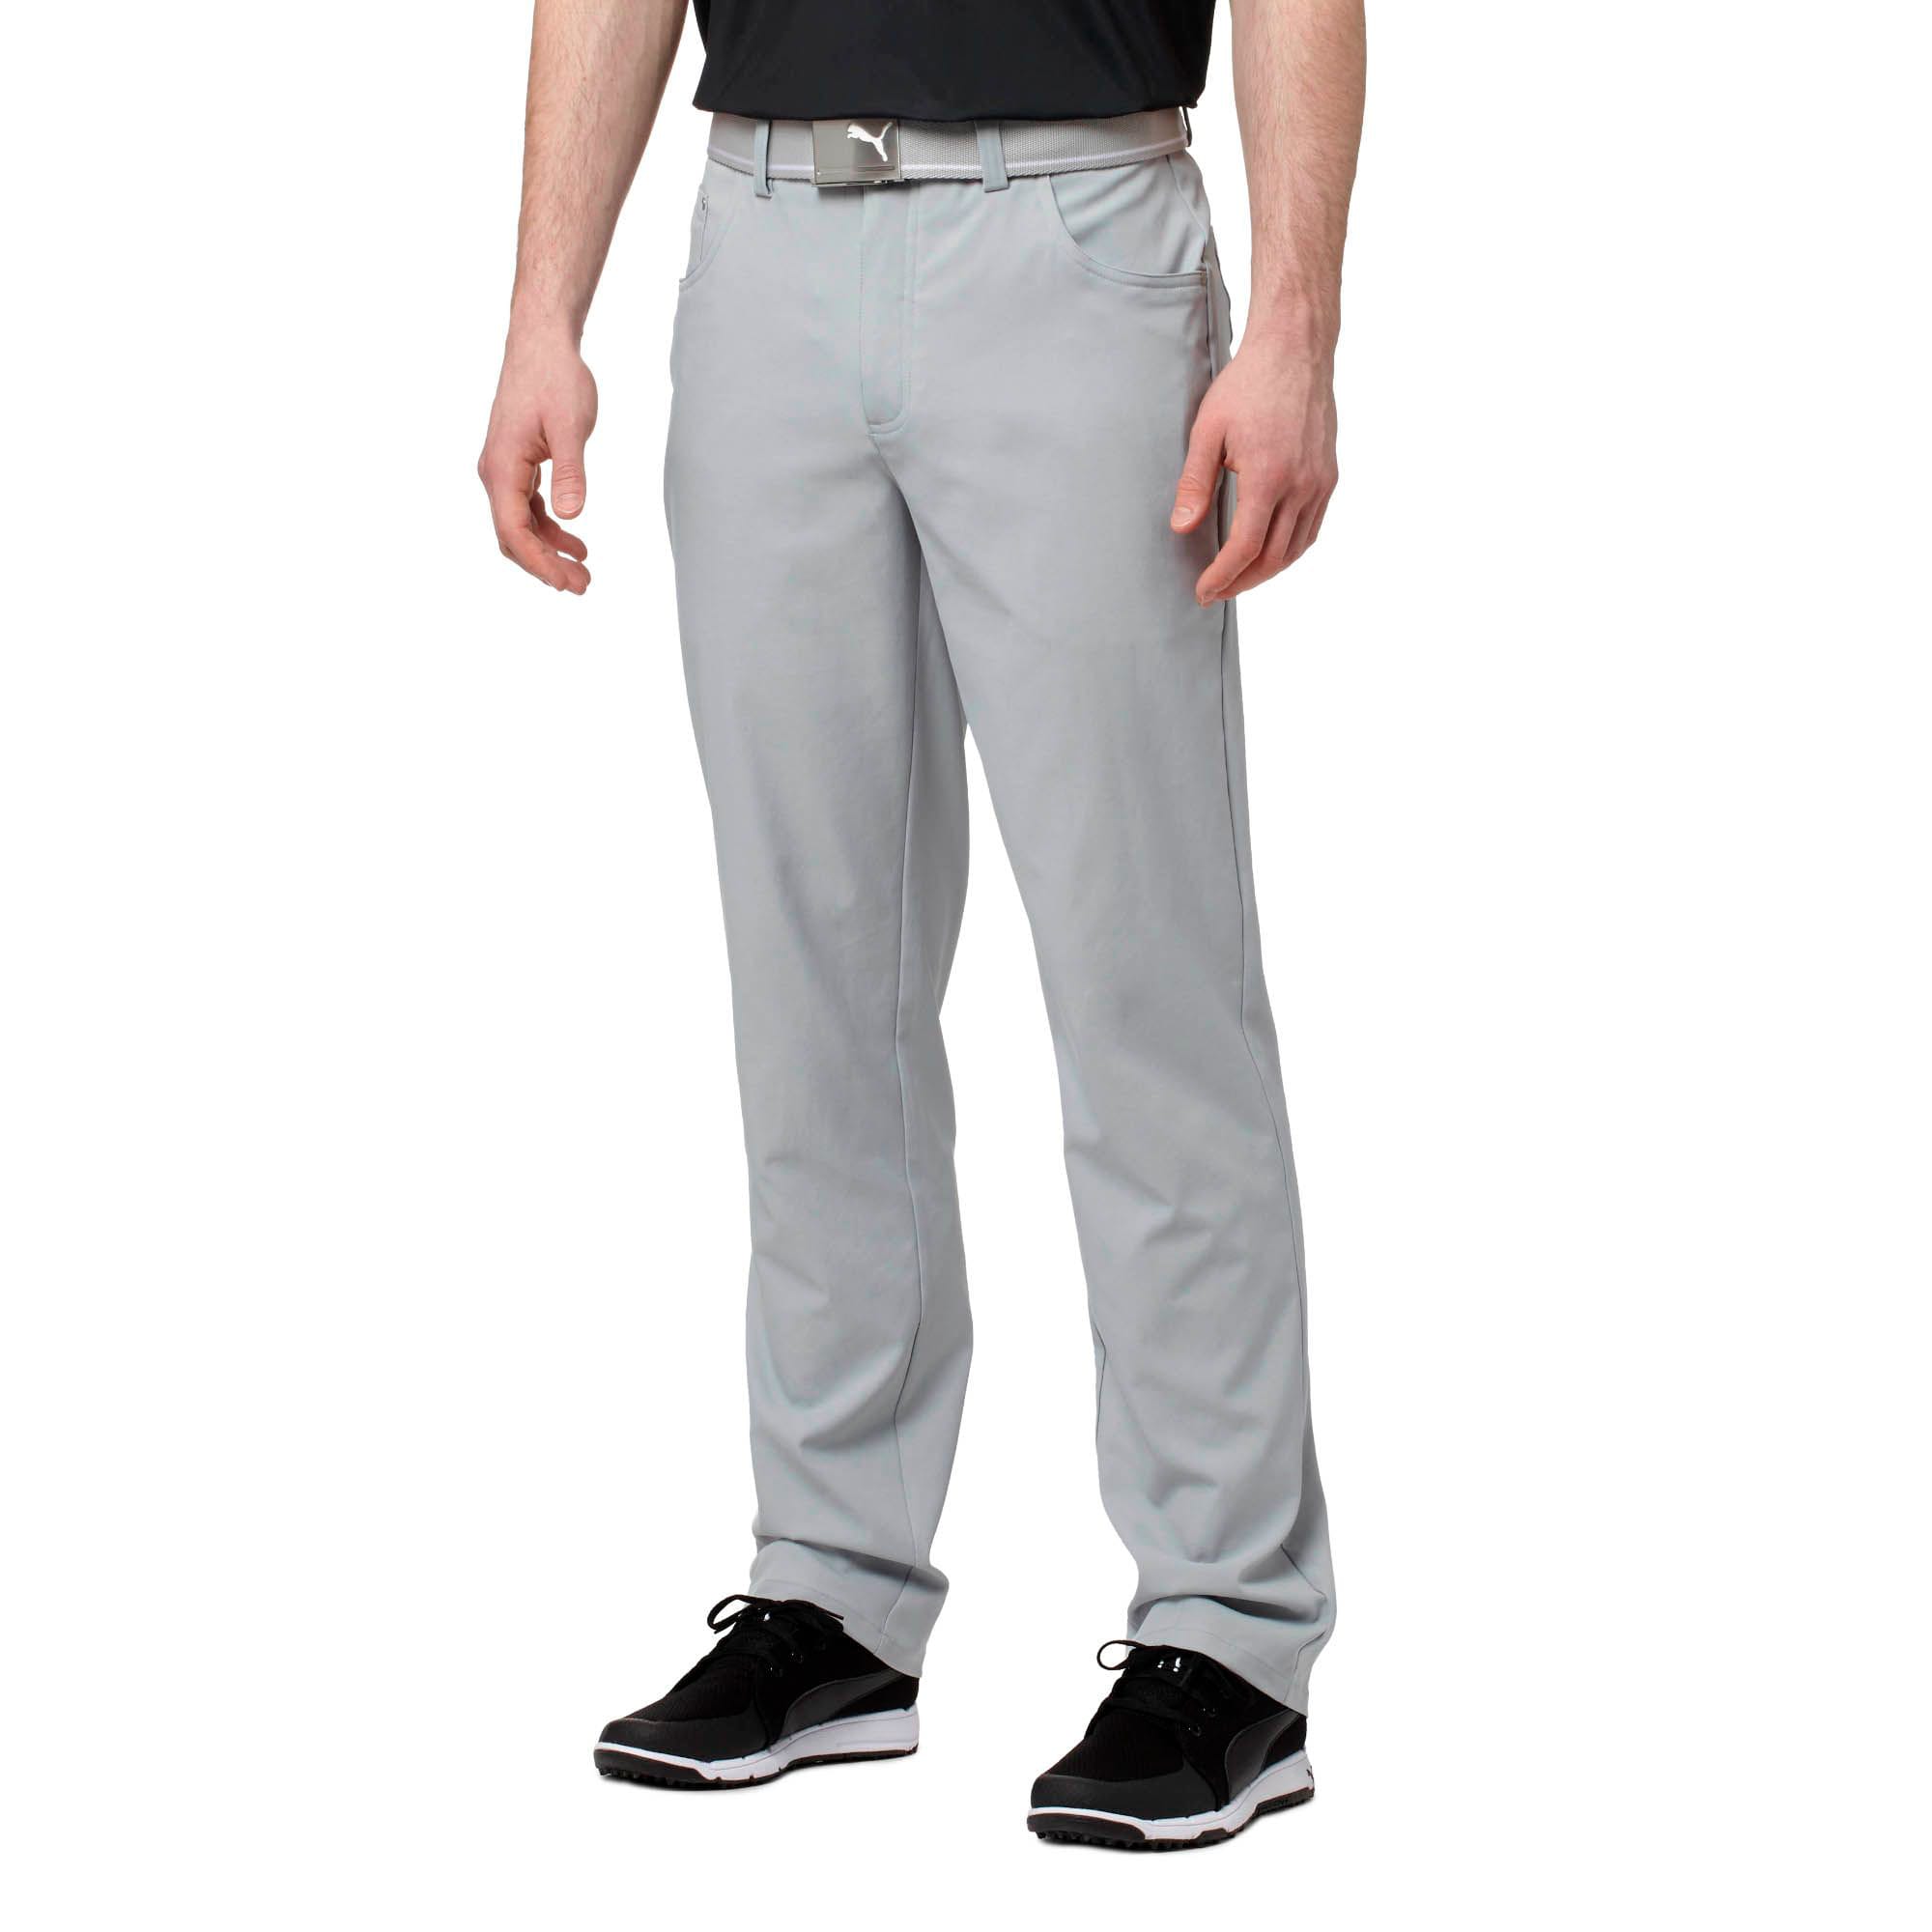 puma 6 pocket golf pants